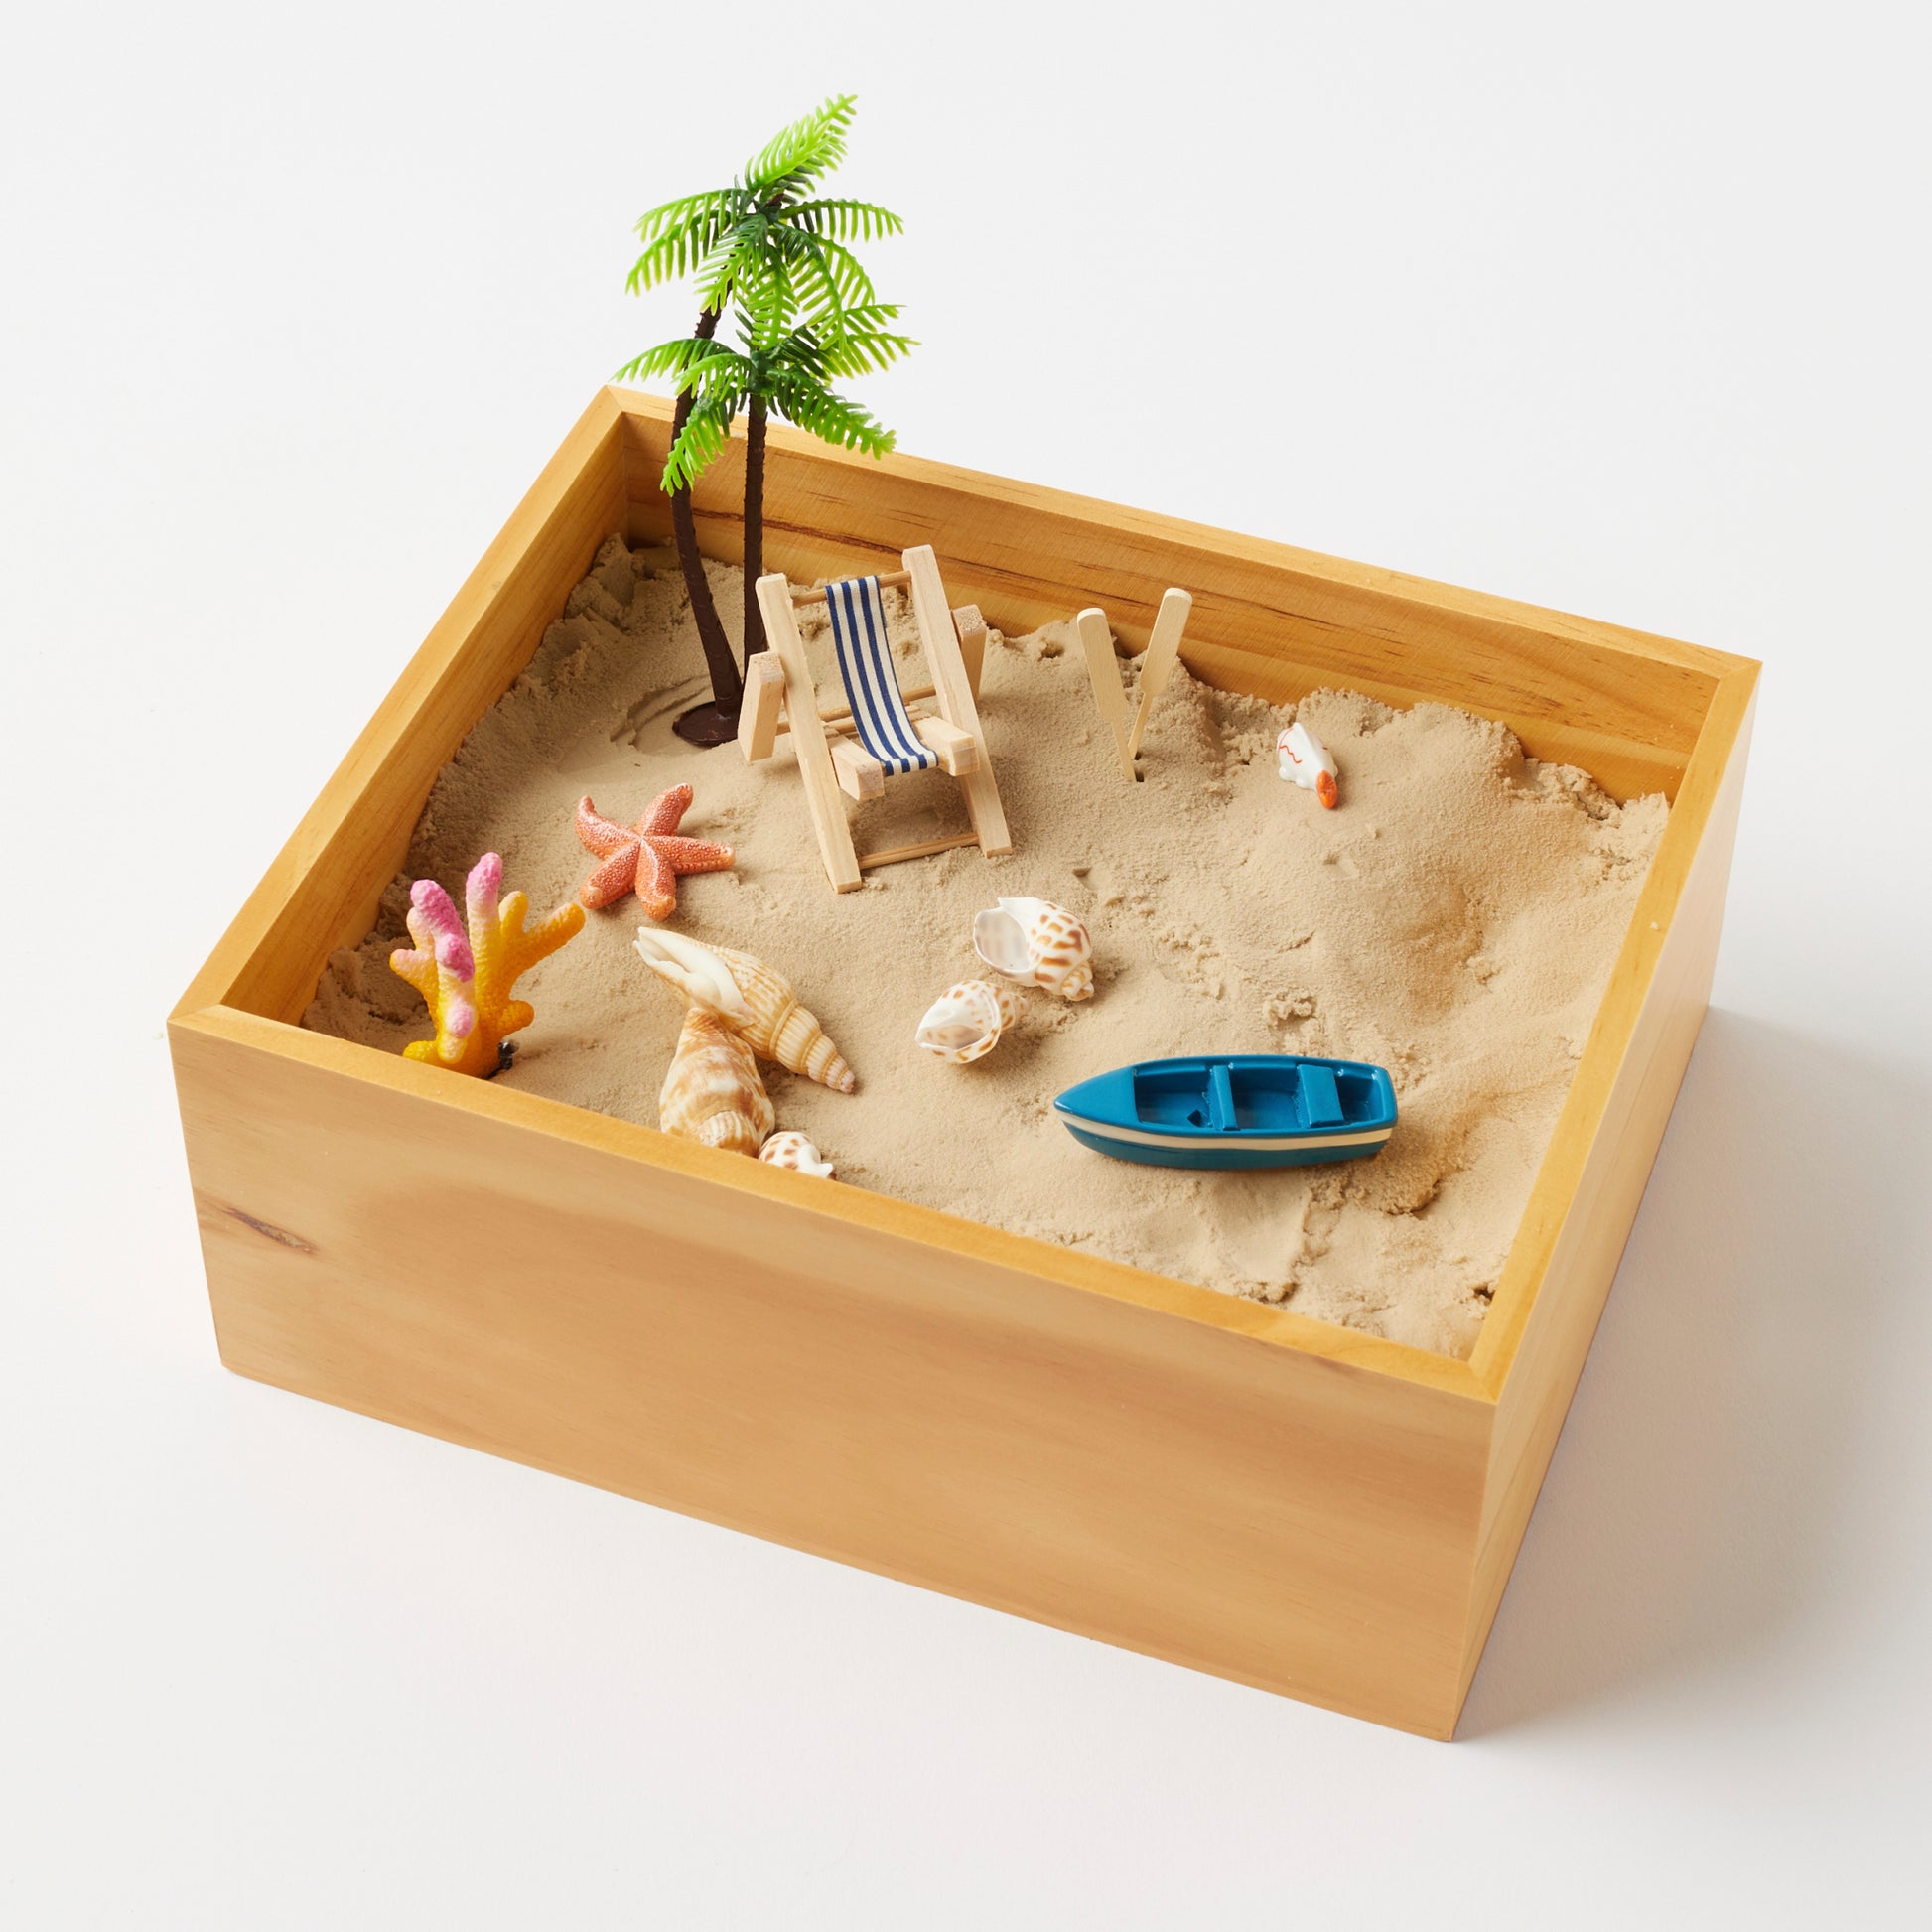 Kinetic Sand Sand Box 454gr